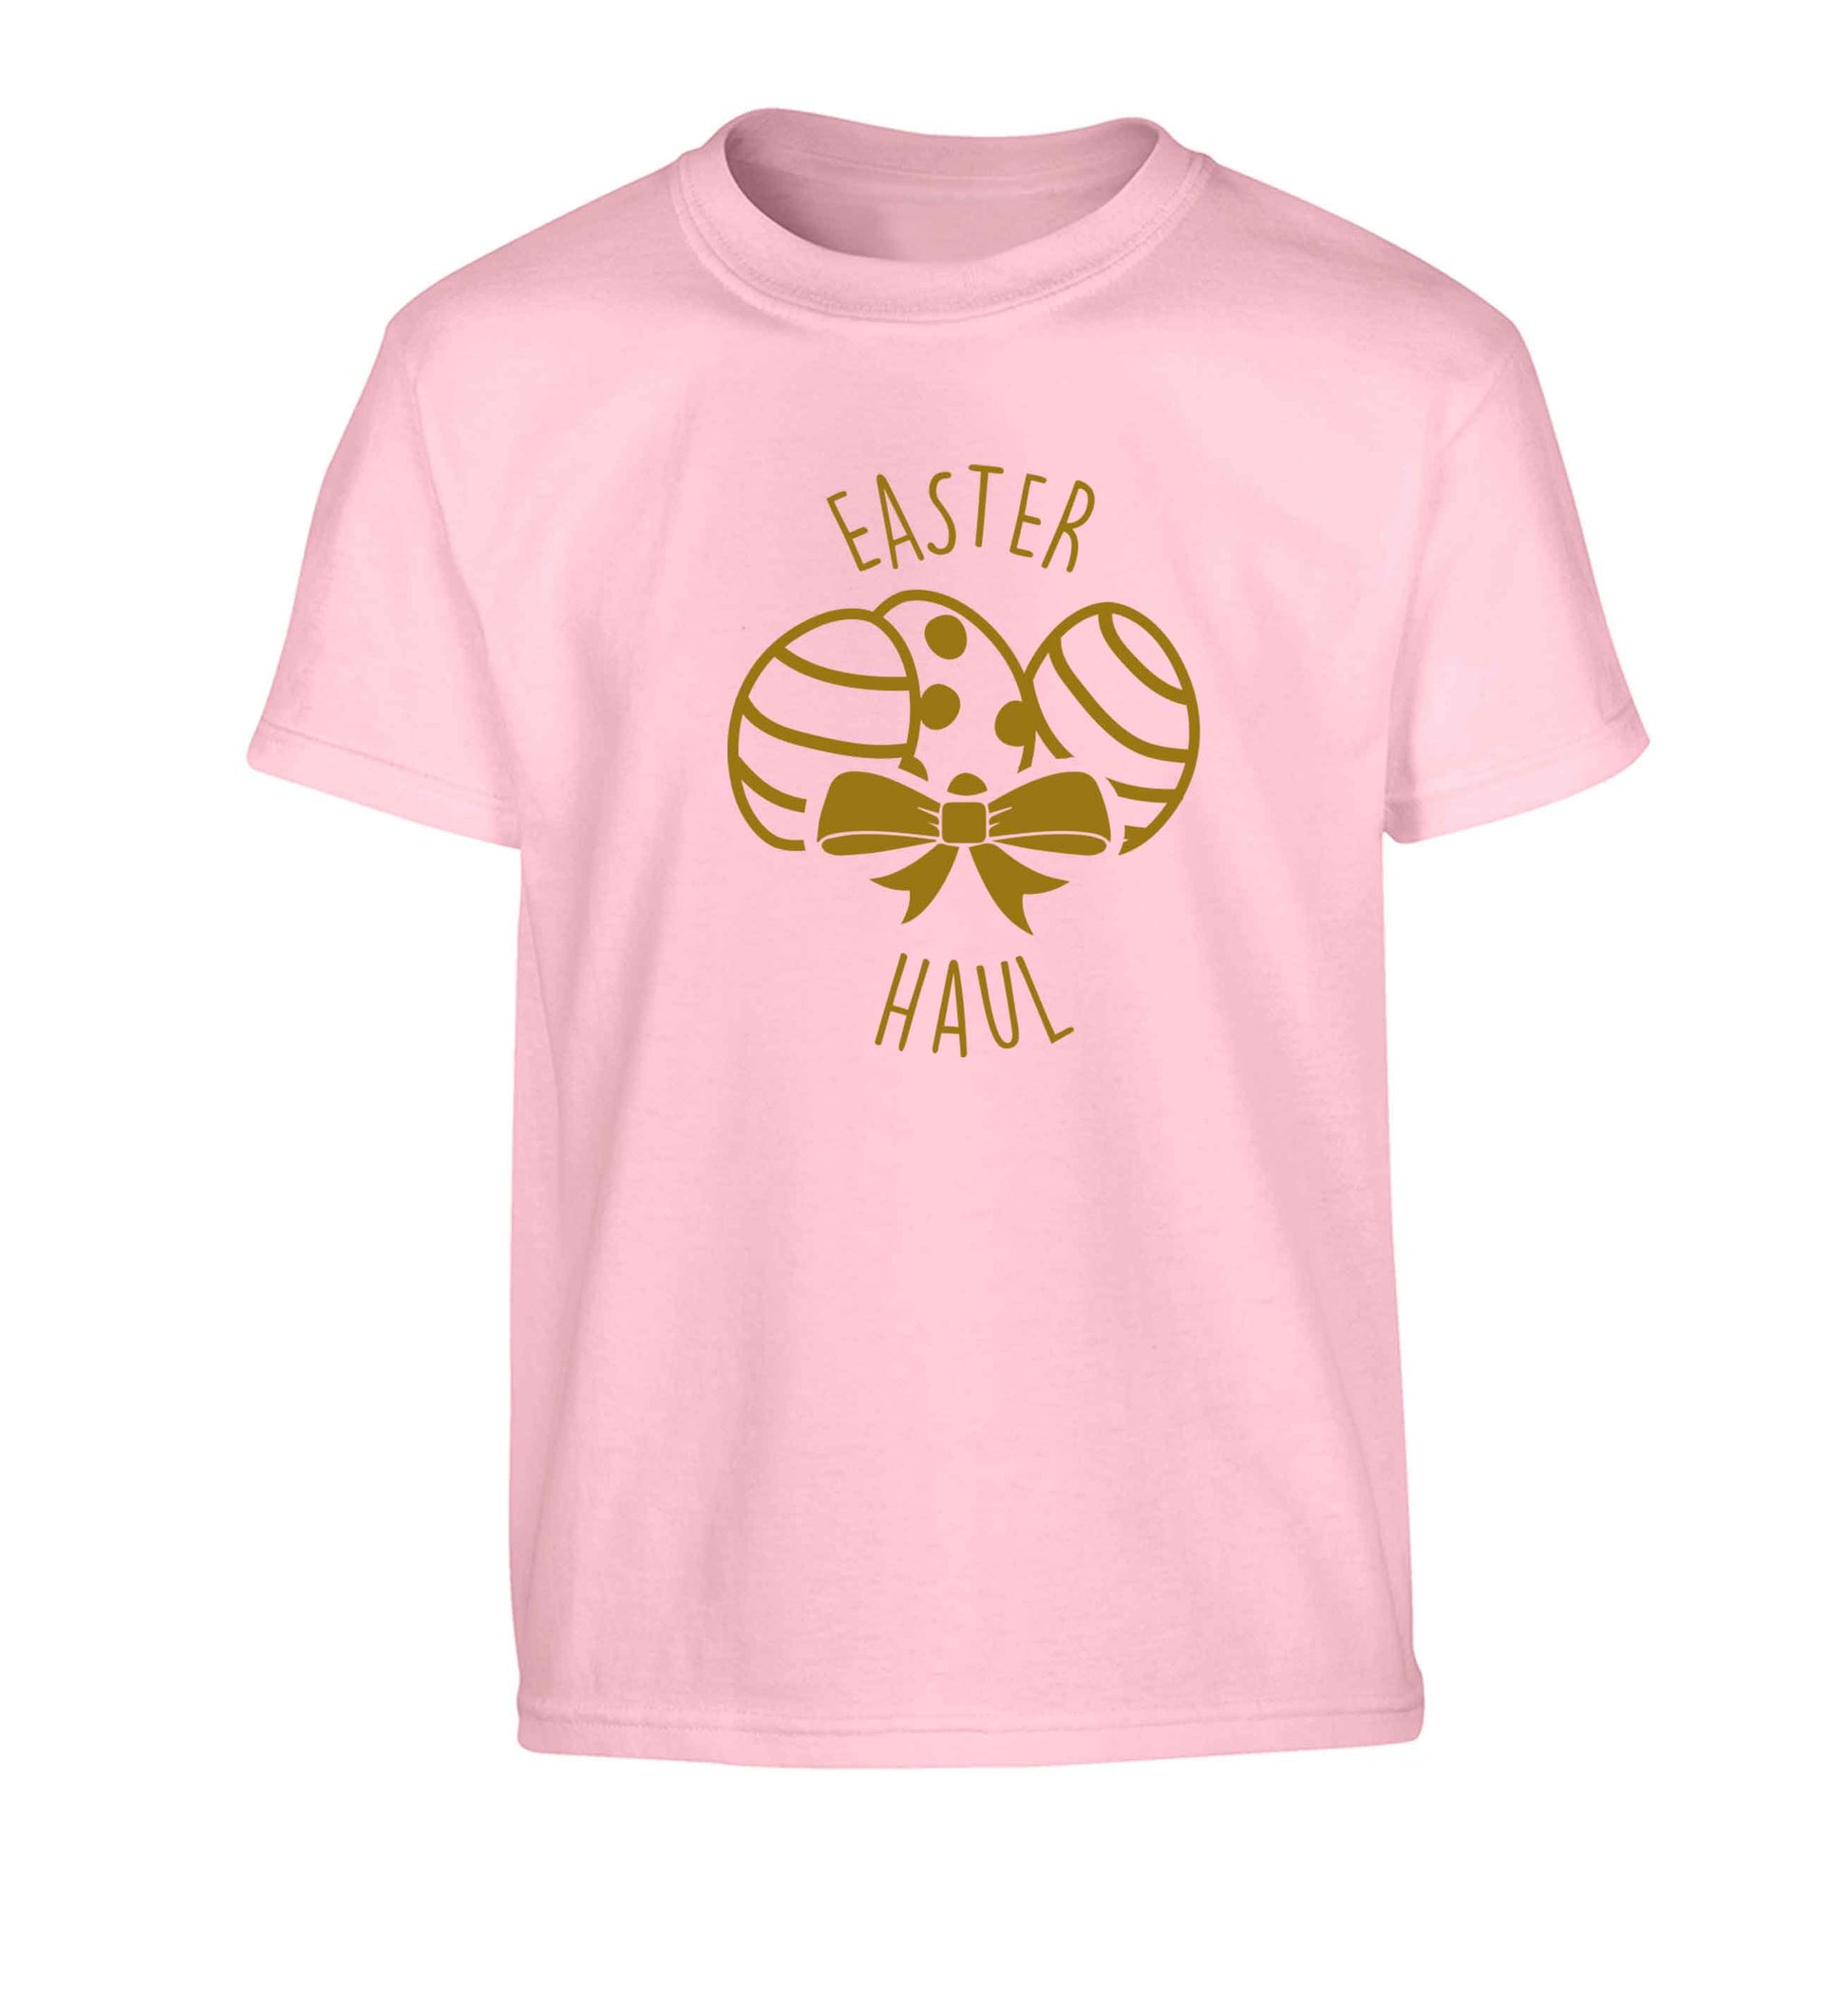 Easter haul Children's light pink Tshirt 12-13 Years